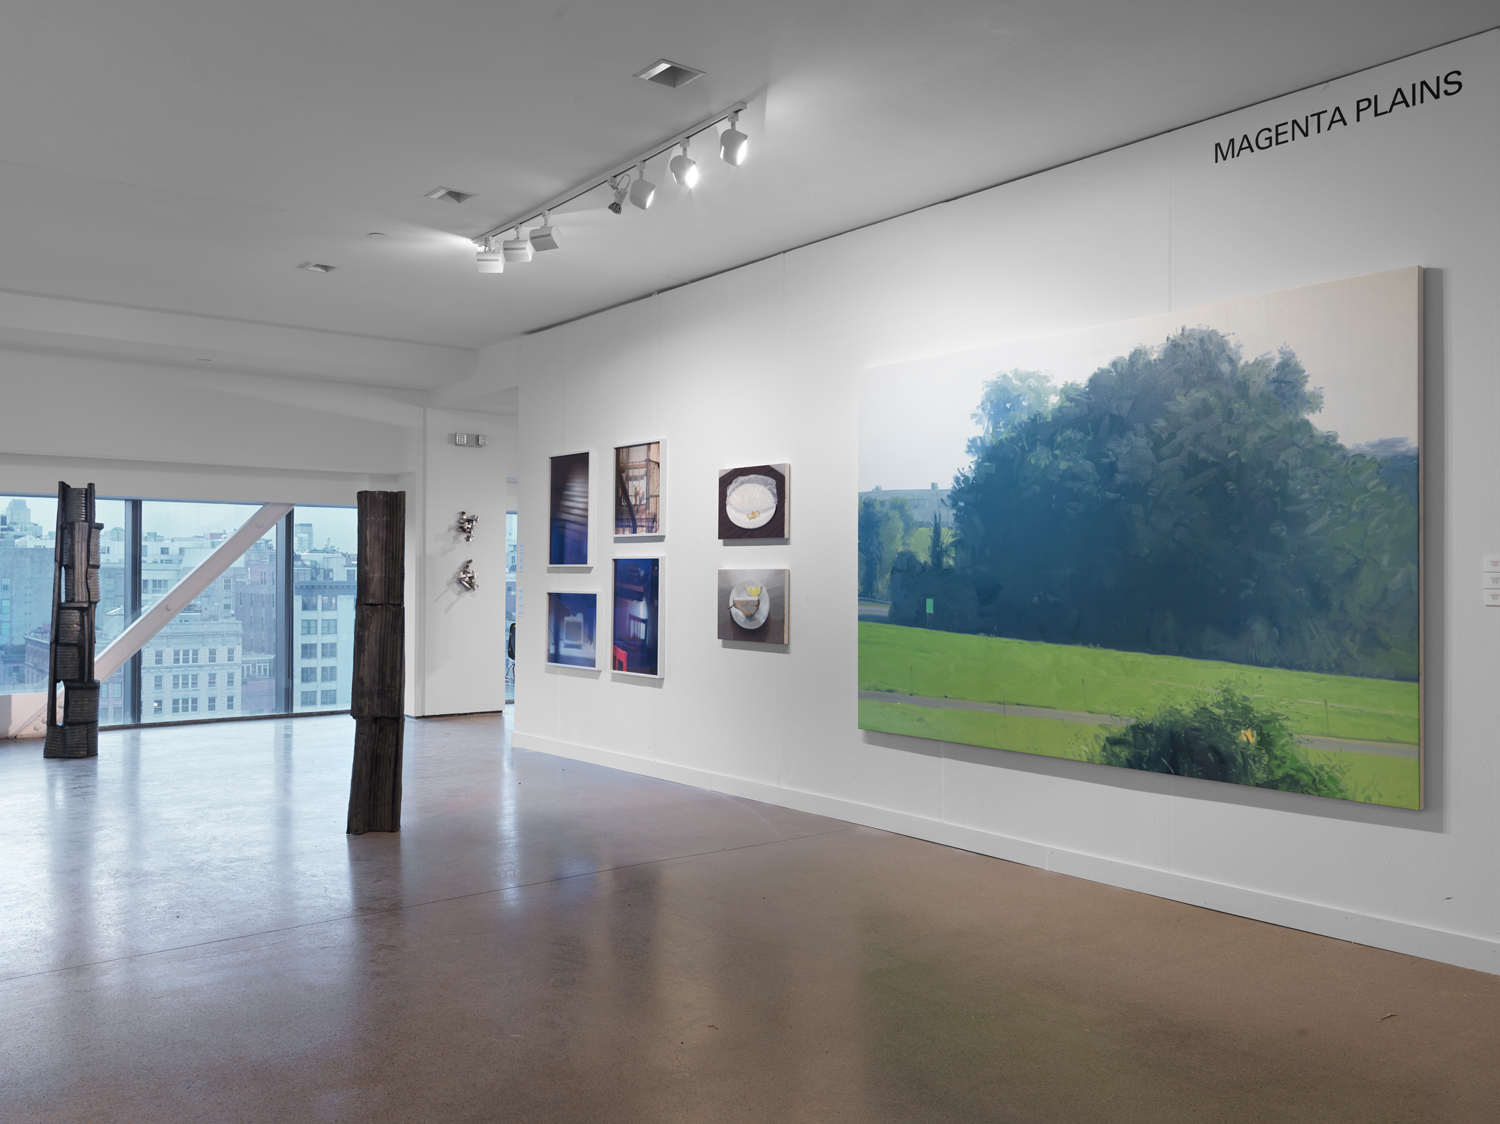 Installation view, Independent Art Fair, Magenta Plains, New York, NY, 2020